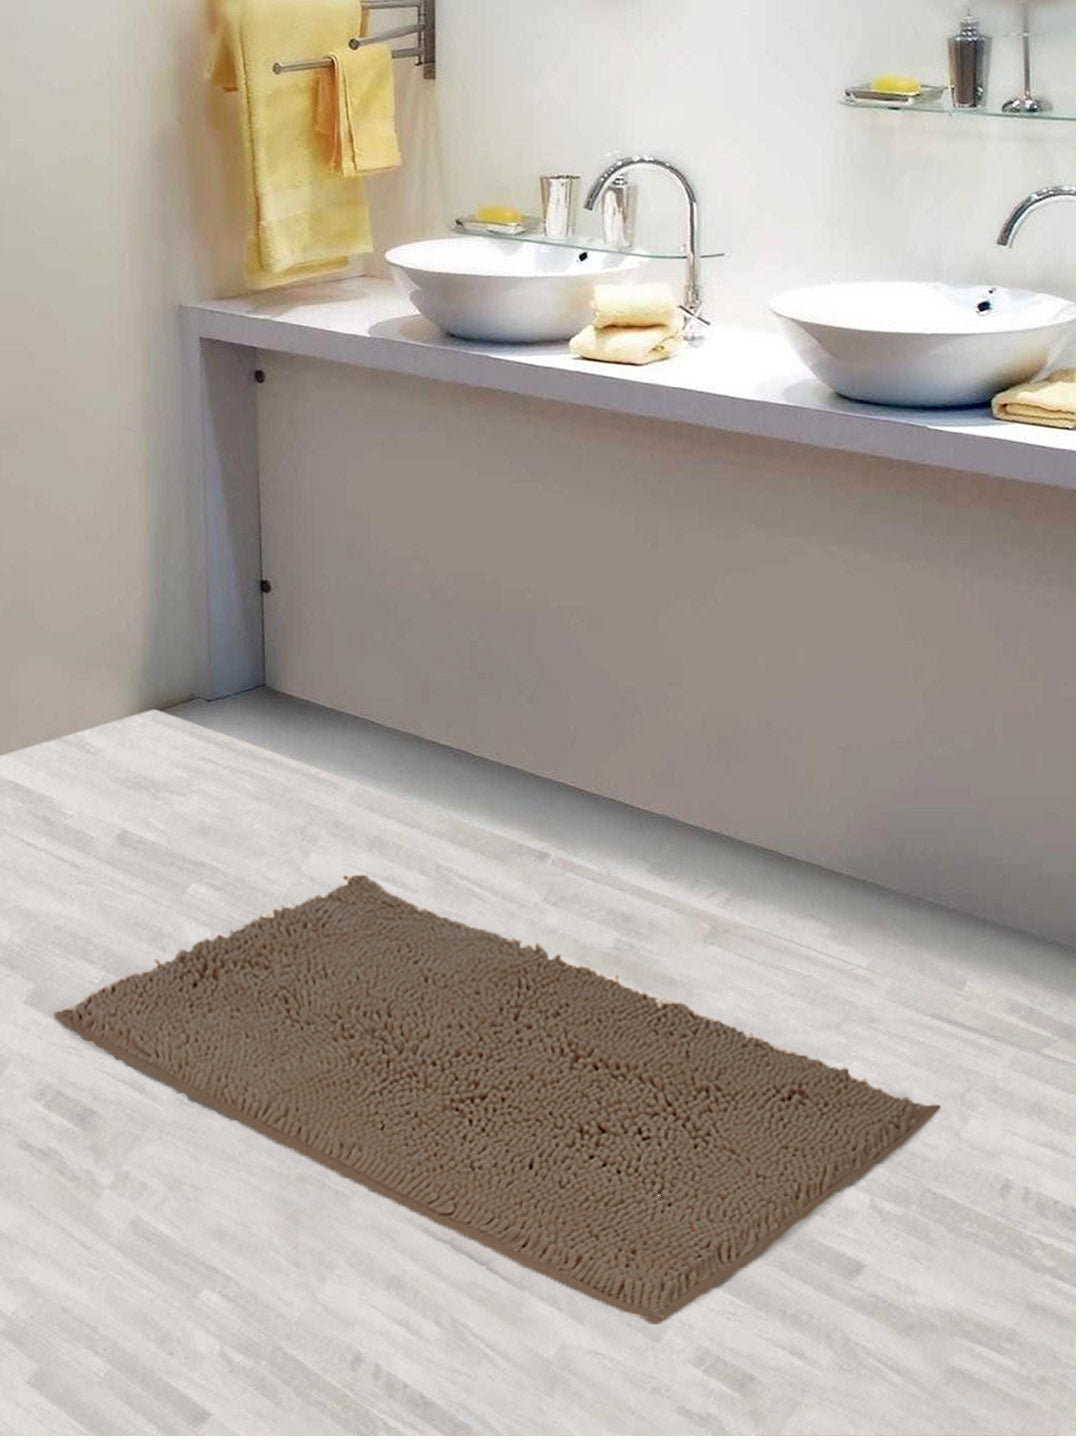 Lushomes Bathroom Mat, 2200 GSM Floor, bath mat Mat with High Pile Microfiber, anti skid mat for bathroom Floor, bath mat Non Slip Anti Slip, Premium Quality (16 x 24 Inch, Single Pc, Grey)